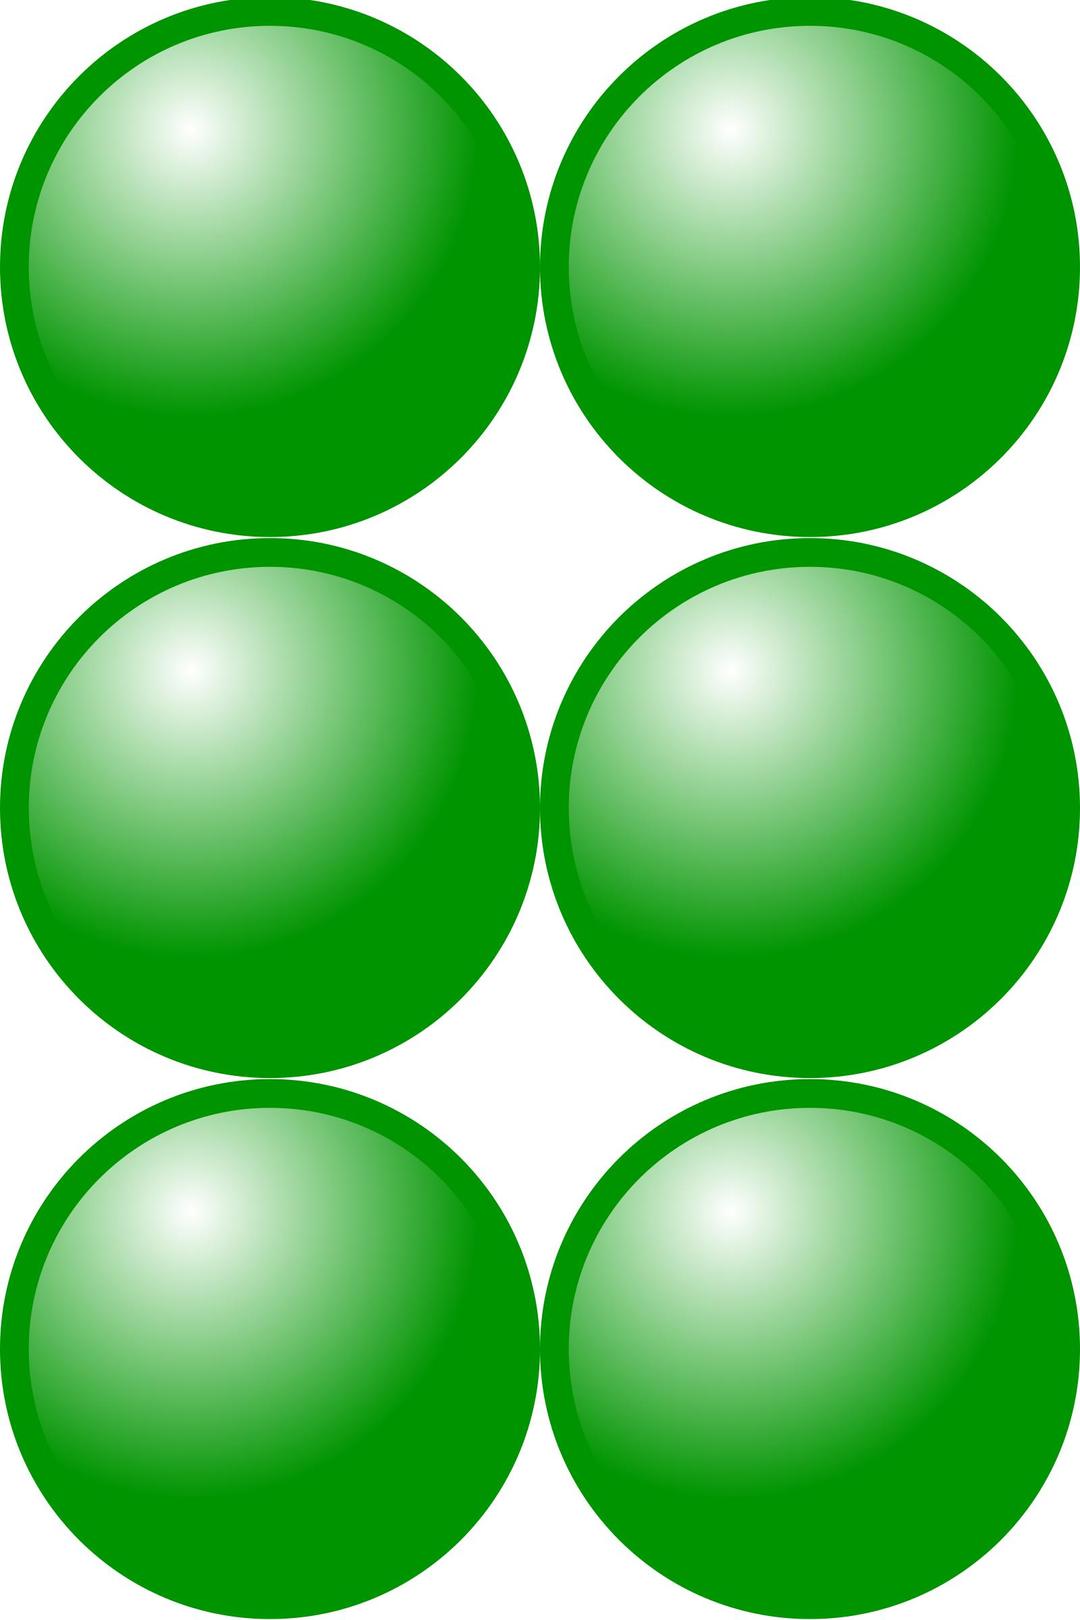 Beads quantitative picture for multiplication 3x2 png transparent